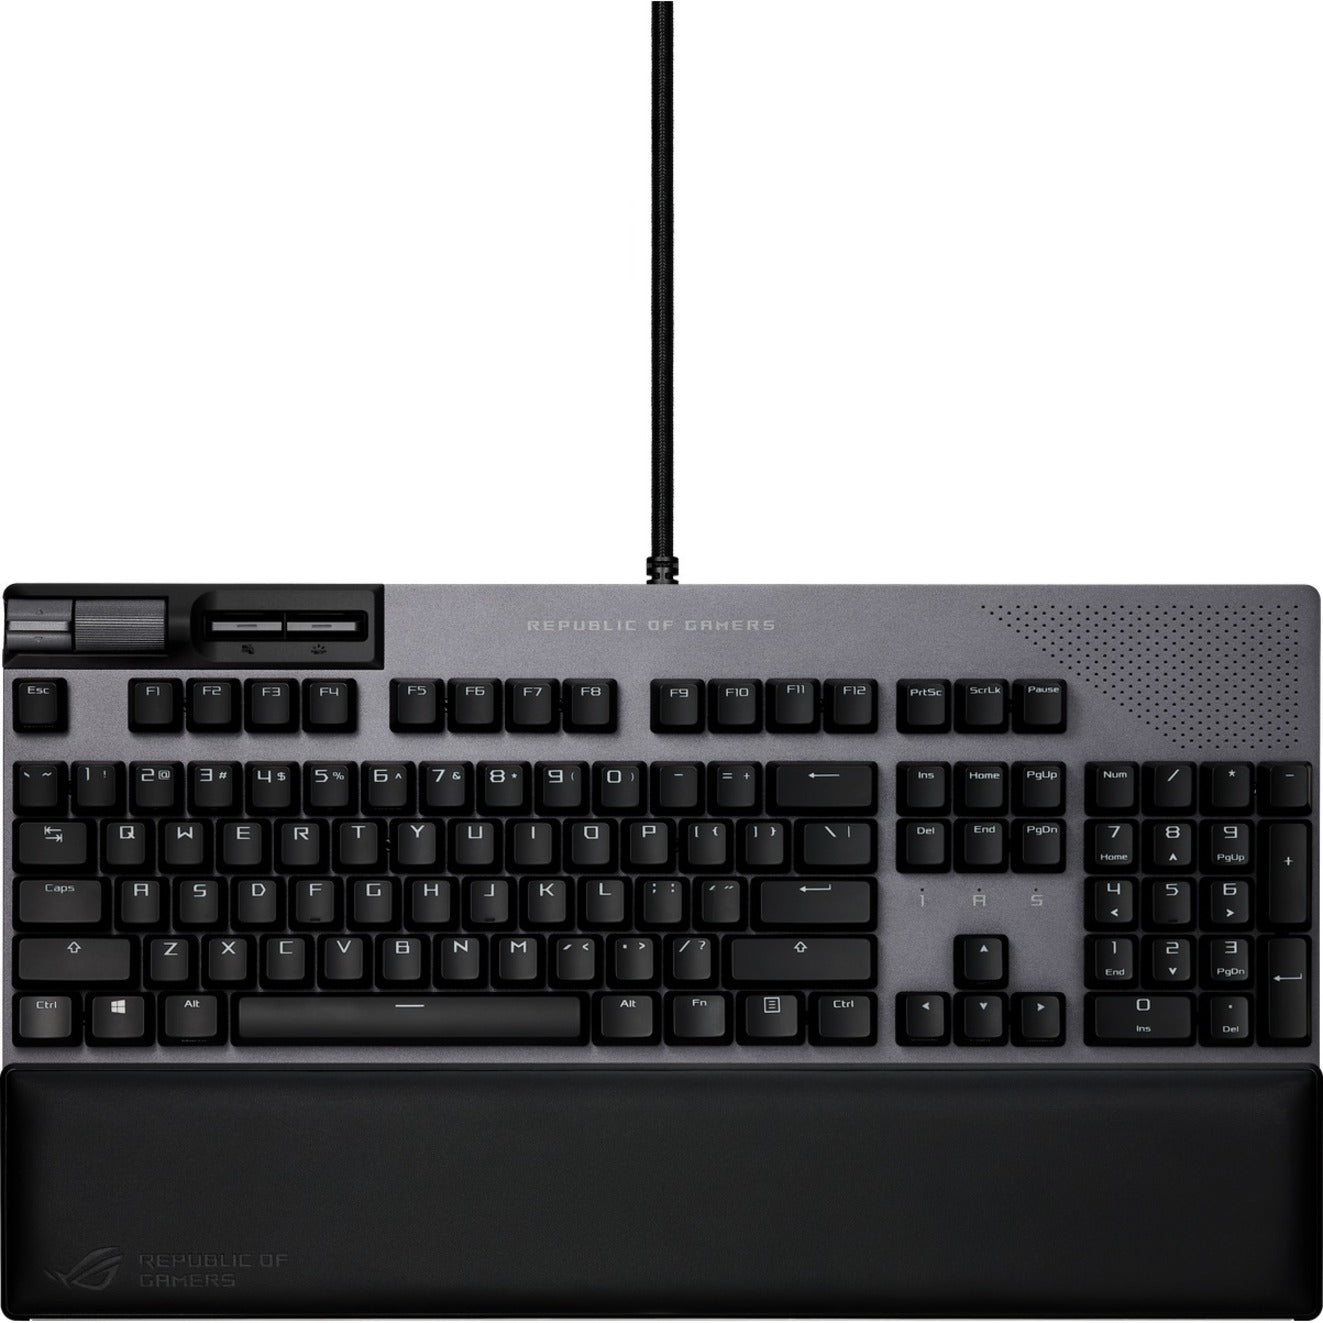 Asus ROG XA07STRIXFLAREIIANI/NXRD Strix Flare II Animate Gaming Keyboard, Hot-swappable, RGB LED, PBT Keycaps, Acoustic Dampening Foam, Media Controls, Wrist Rest